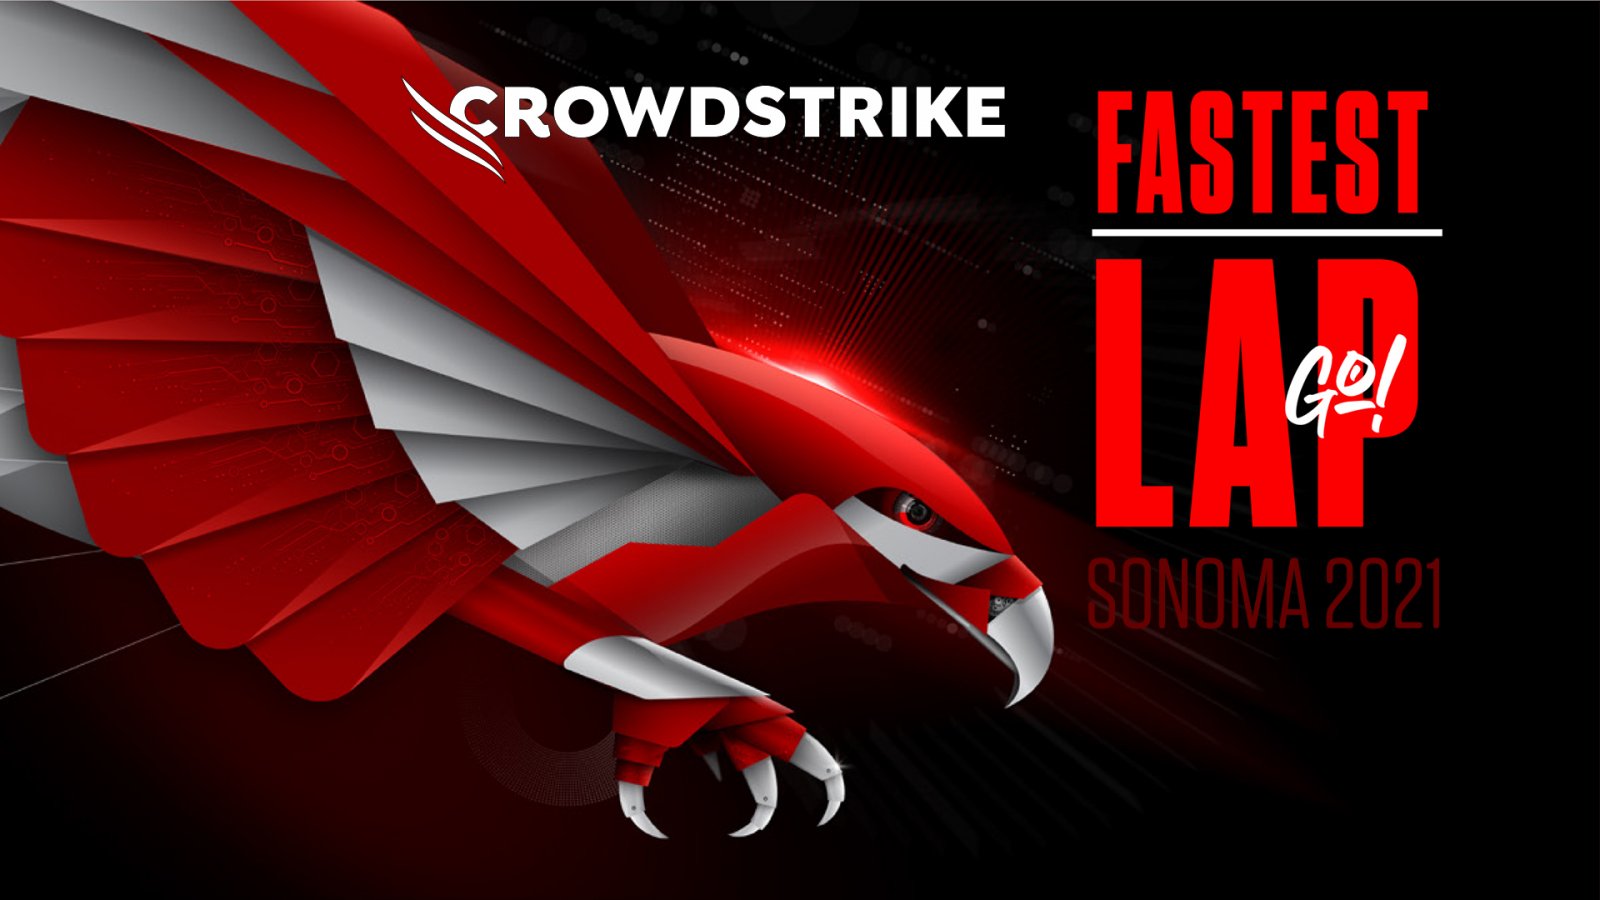 CrowdStrike Fastest Lap Award Returns for a Second Season